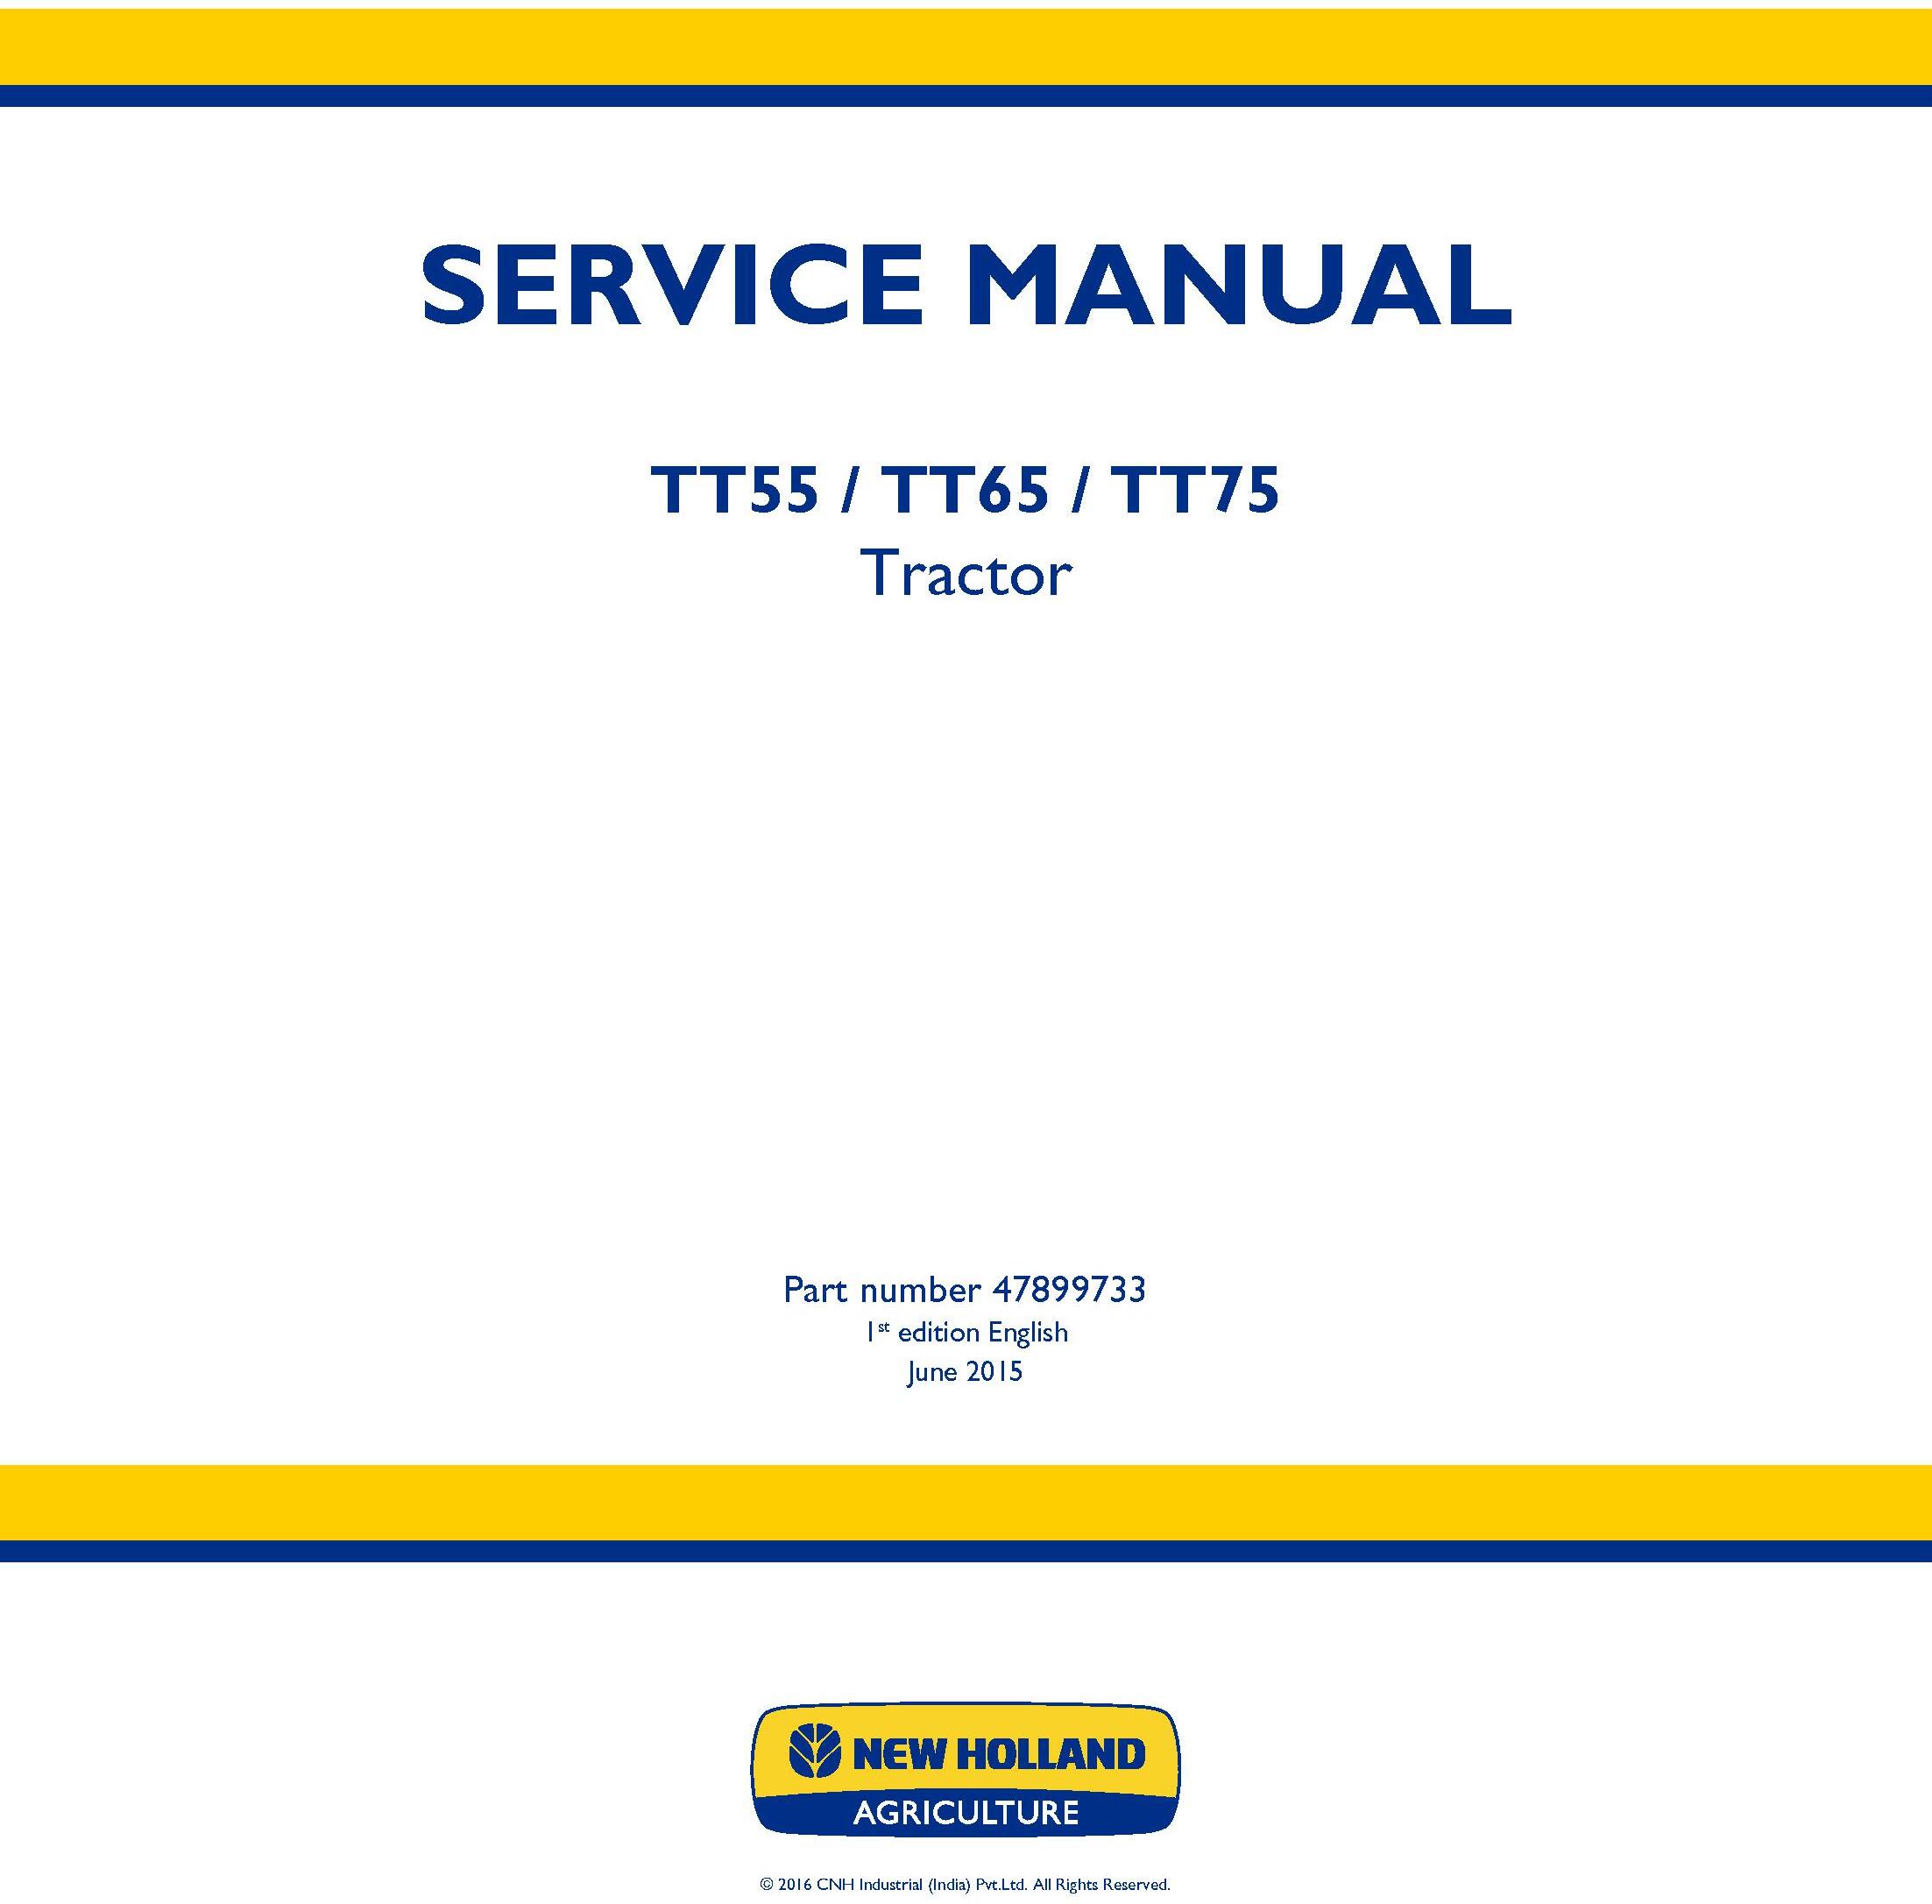 New Holland TT55, TT65, TT75 2WD or 4WD Tractor Service Manual - 19445